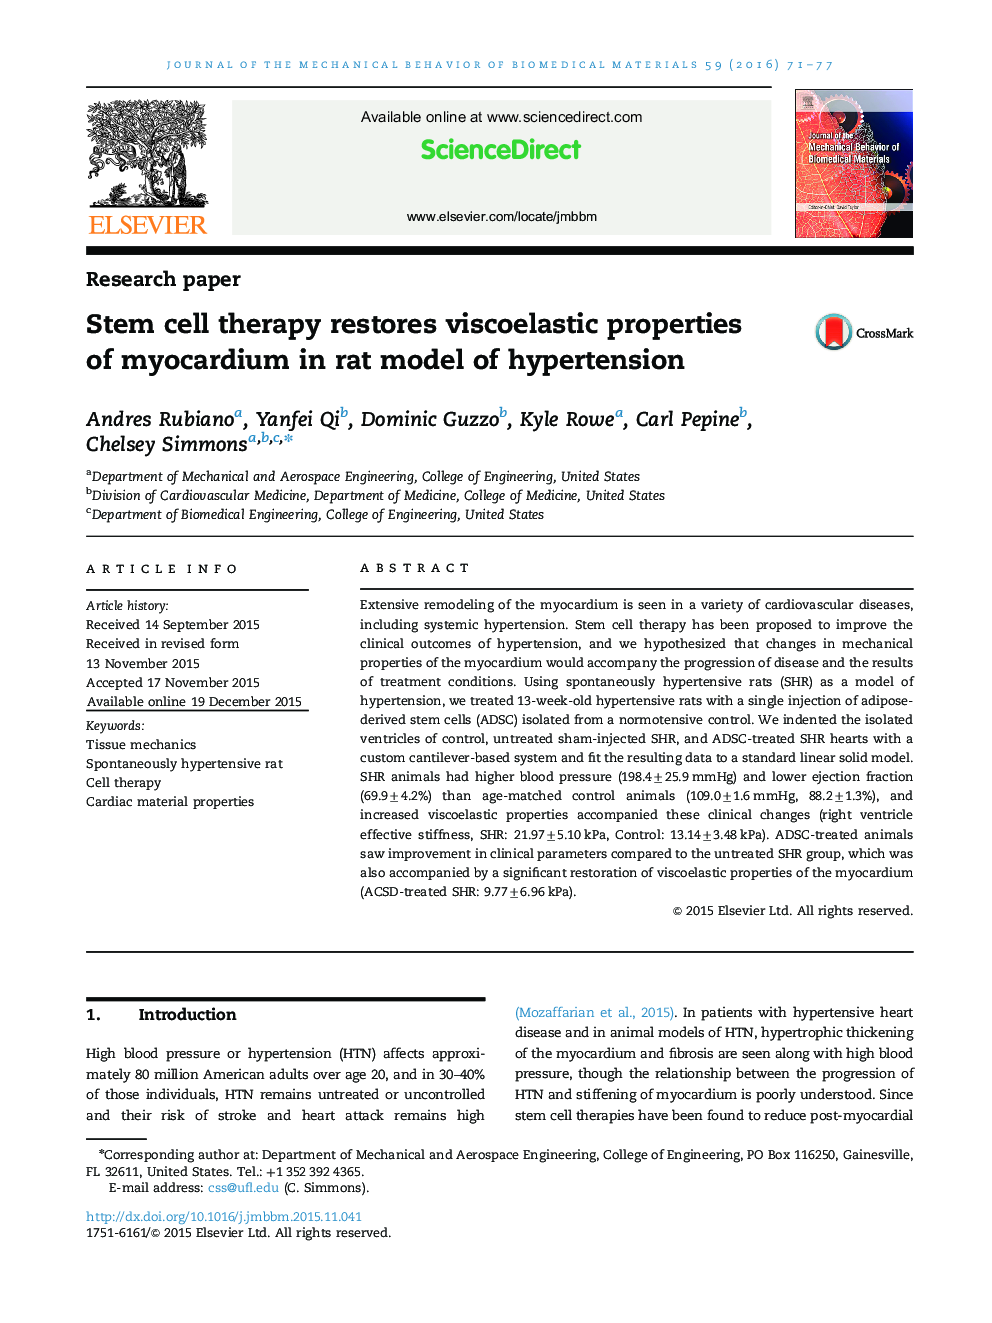 Stem cell therapy restores viscoelastic properties of myocardium in rat model of hypertension